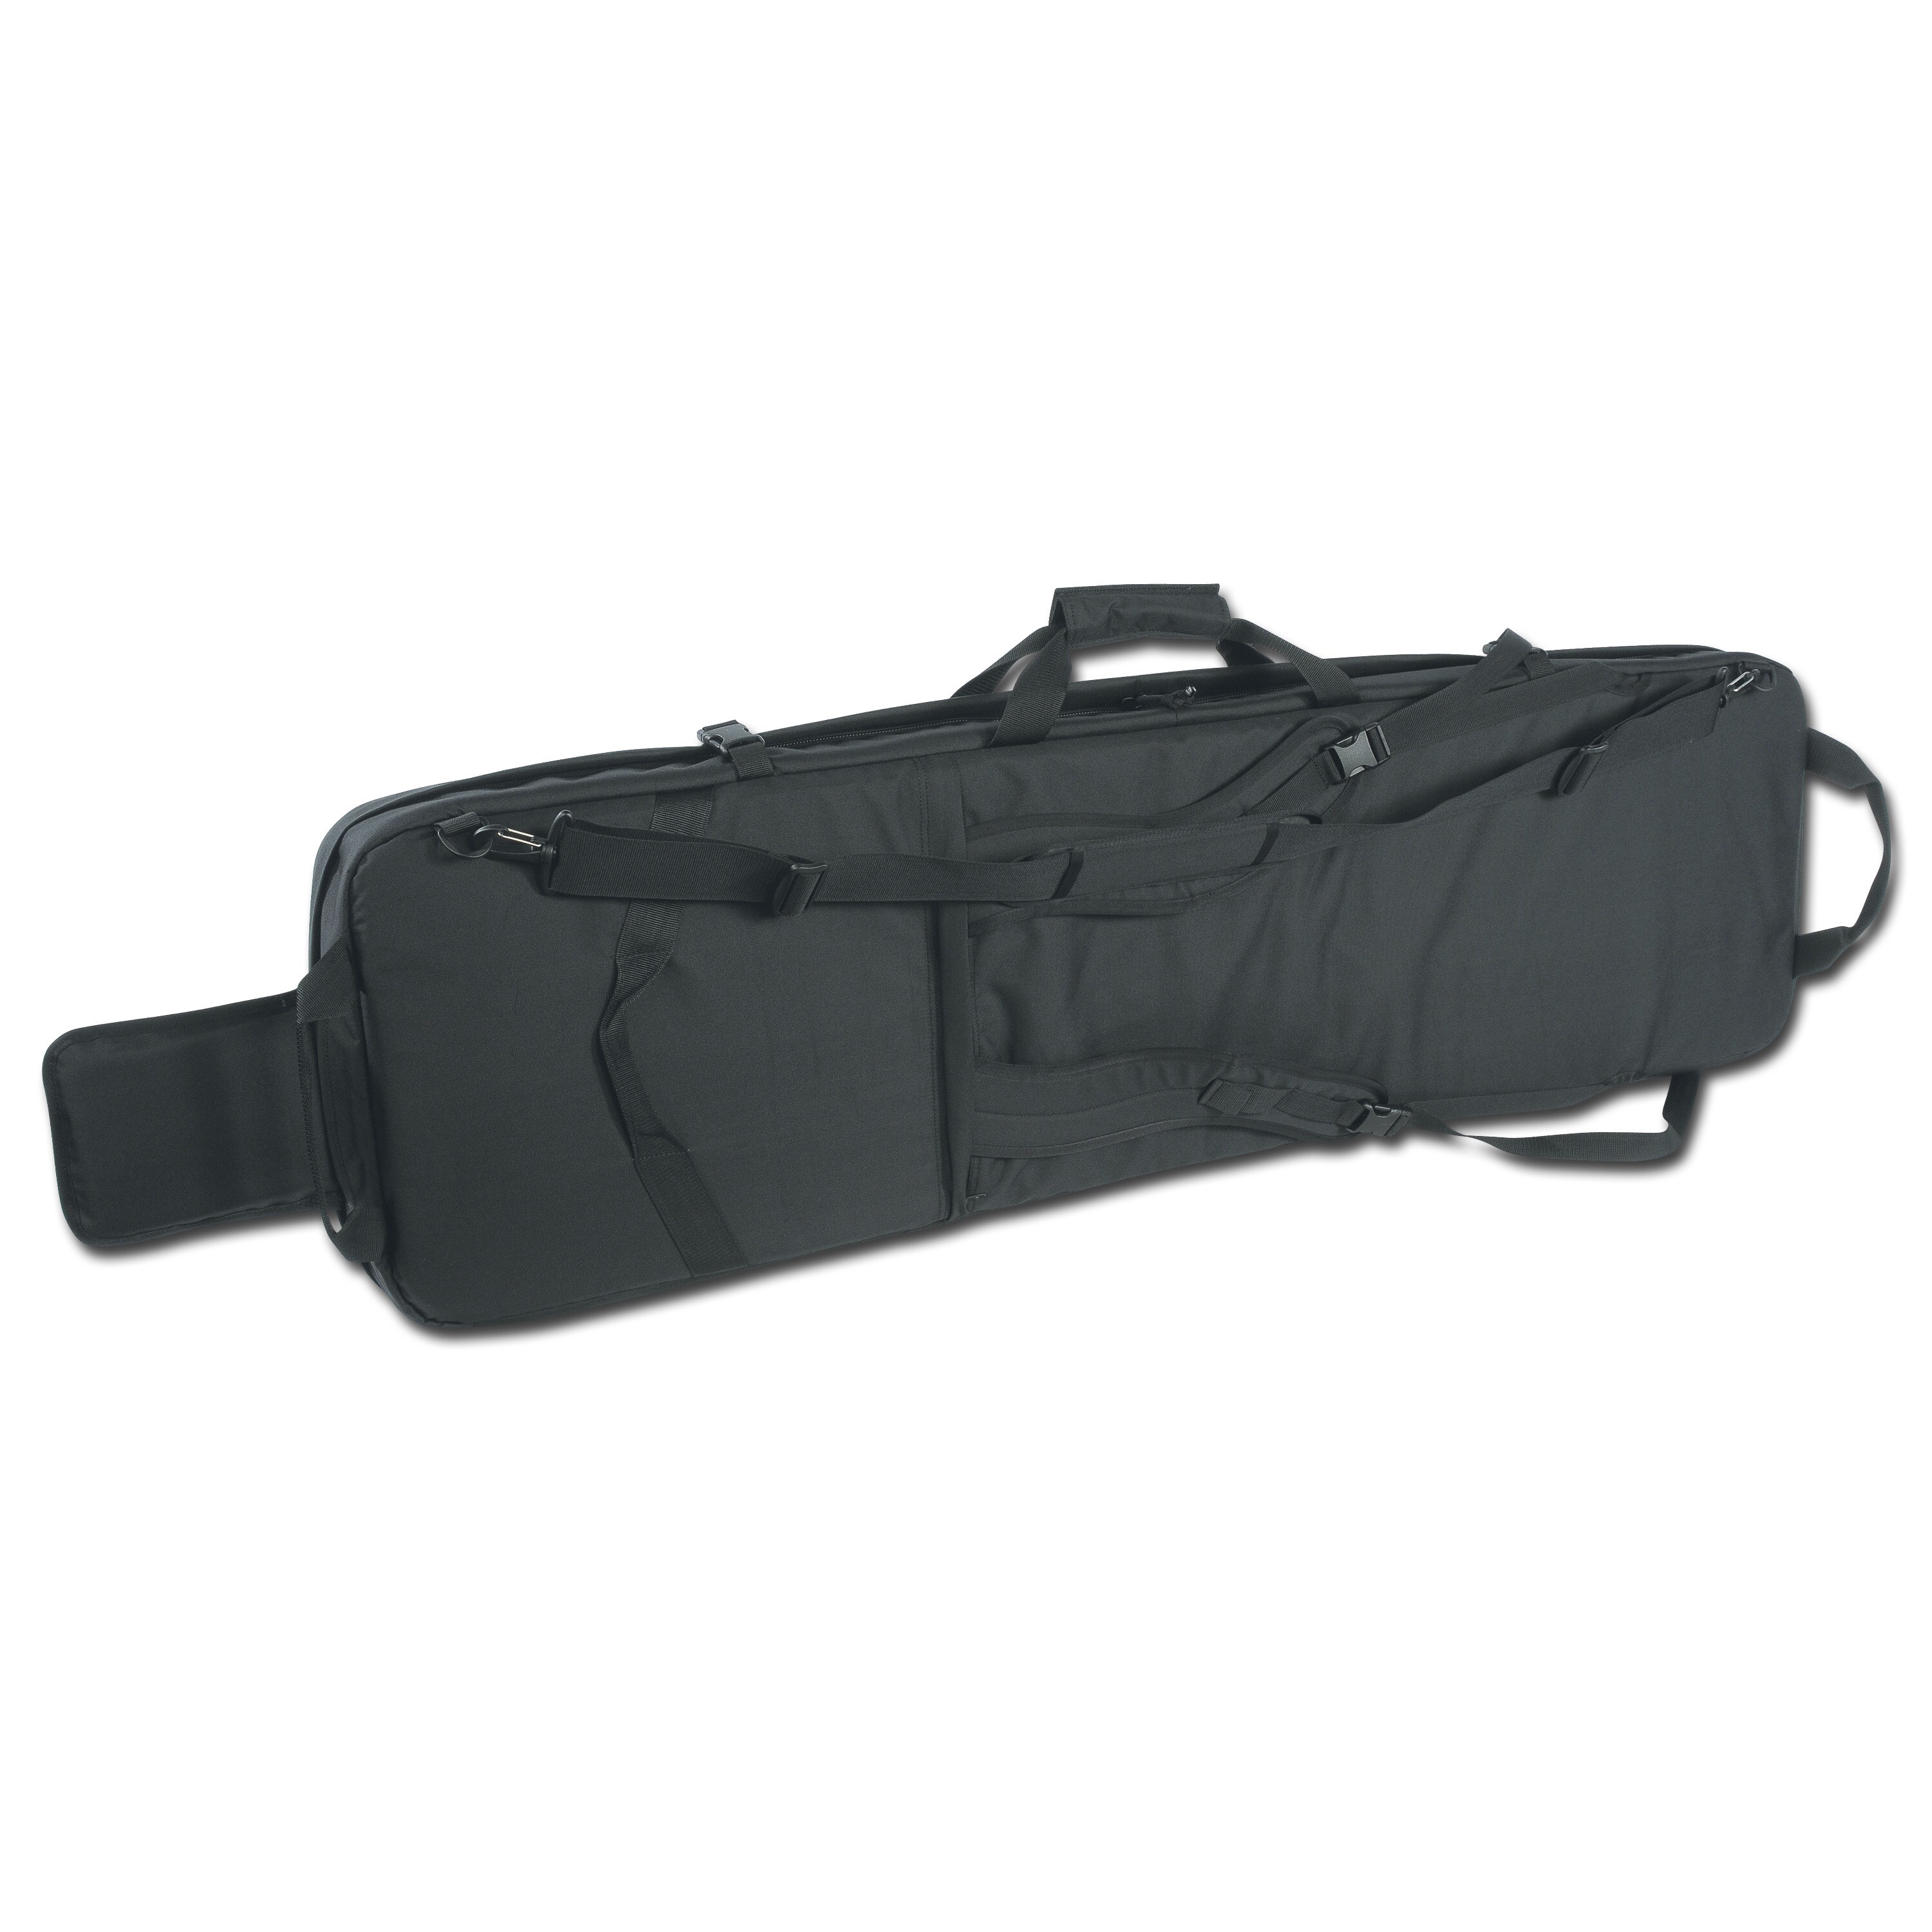 Purchase the Tasmanian Tiger DBL Modular Rifle Bag black by ASMC